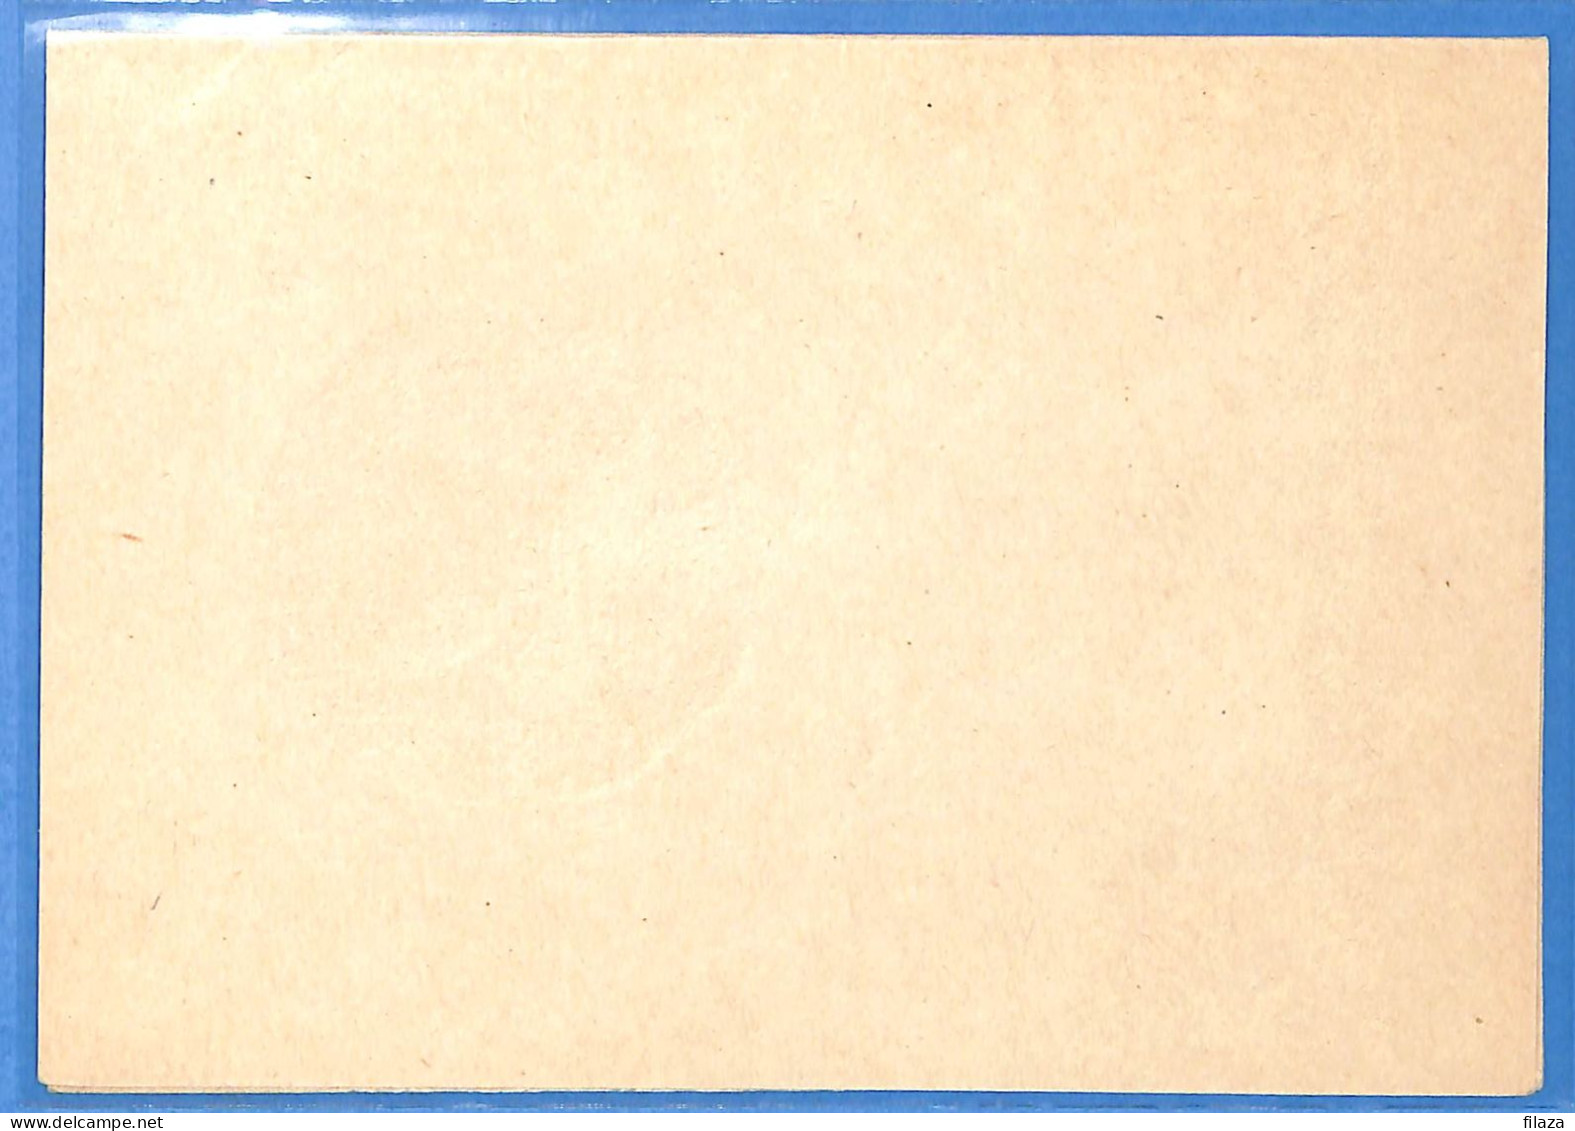 Böhmen Und Mähren 1941 - Carte Postale De Slatinian - G34582 - Lettres & Documents